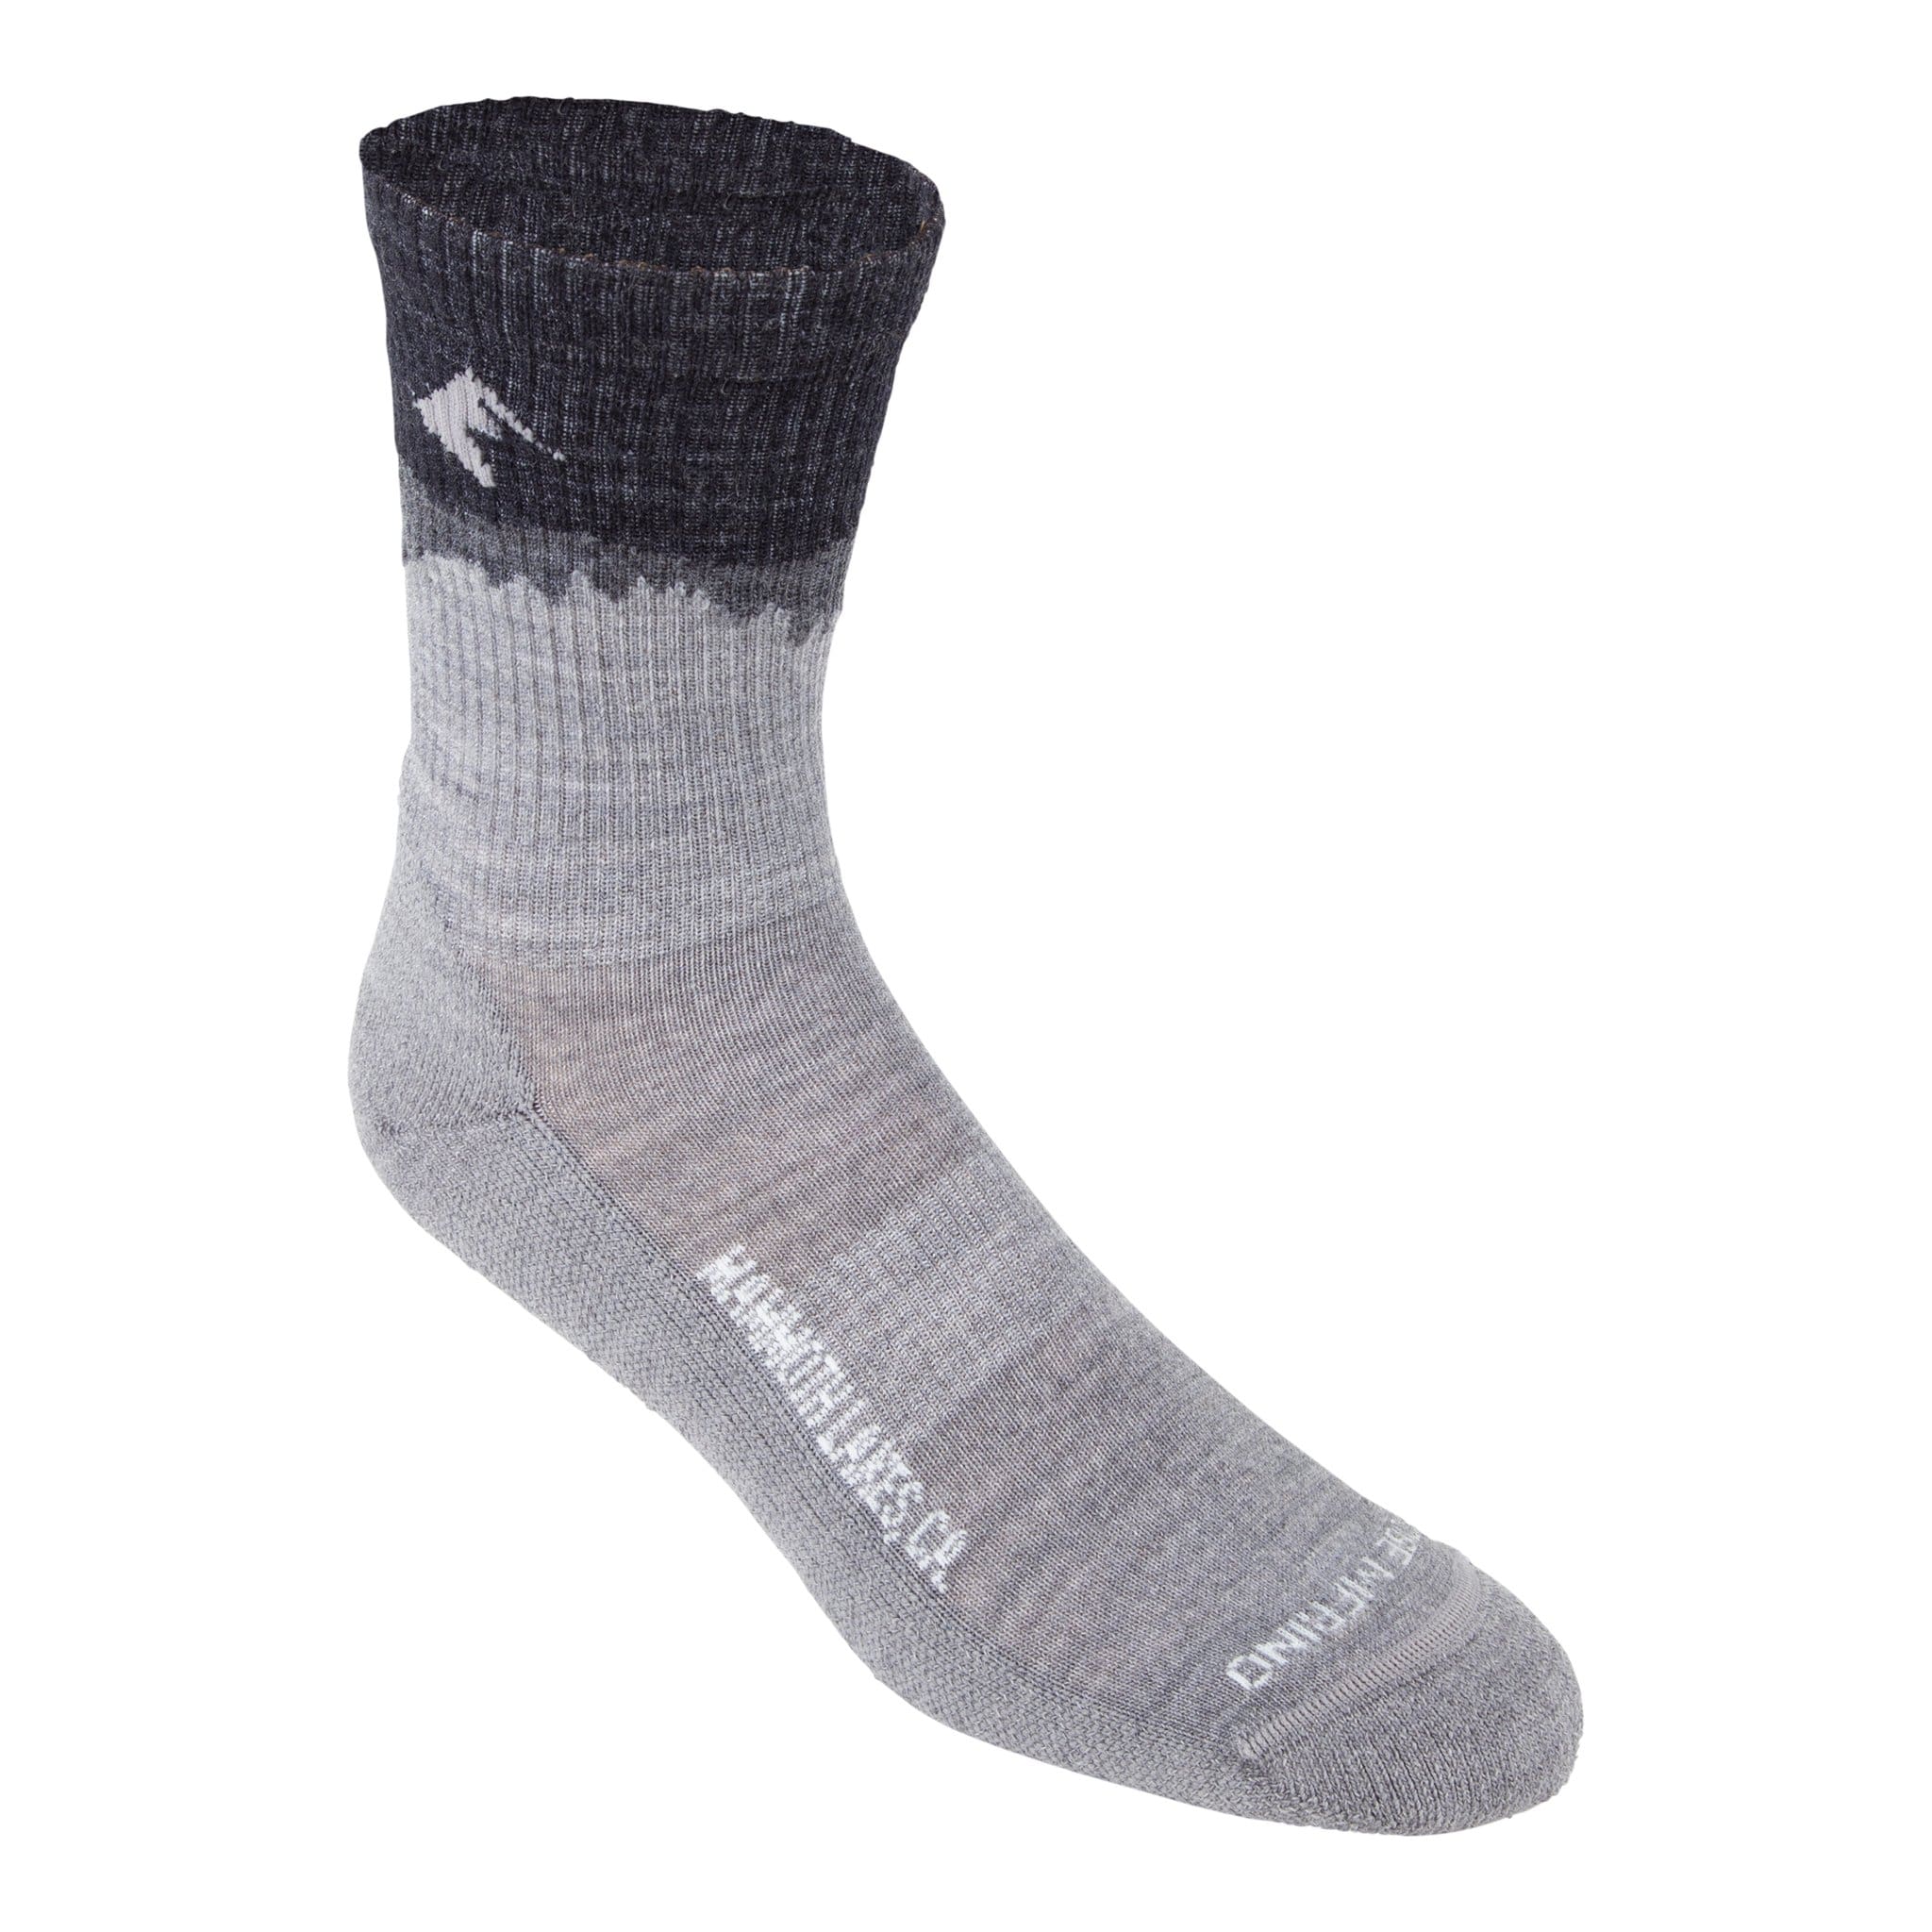 Lightweight Merino Wool Hiking Socks - Minaret